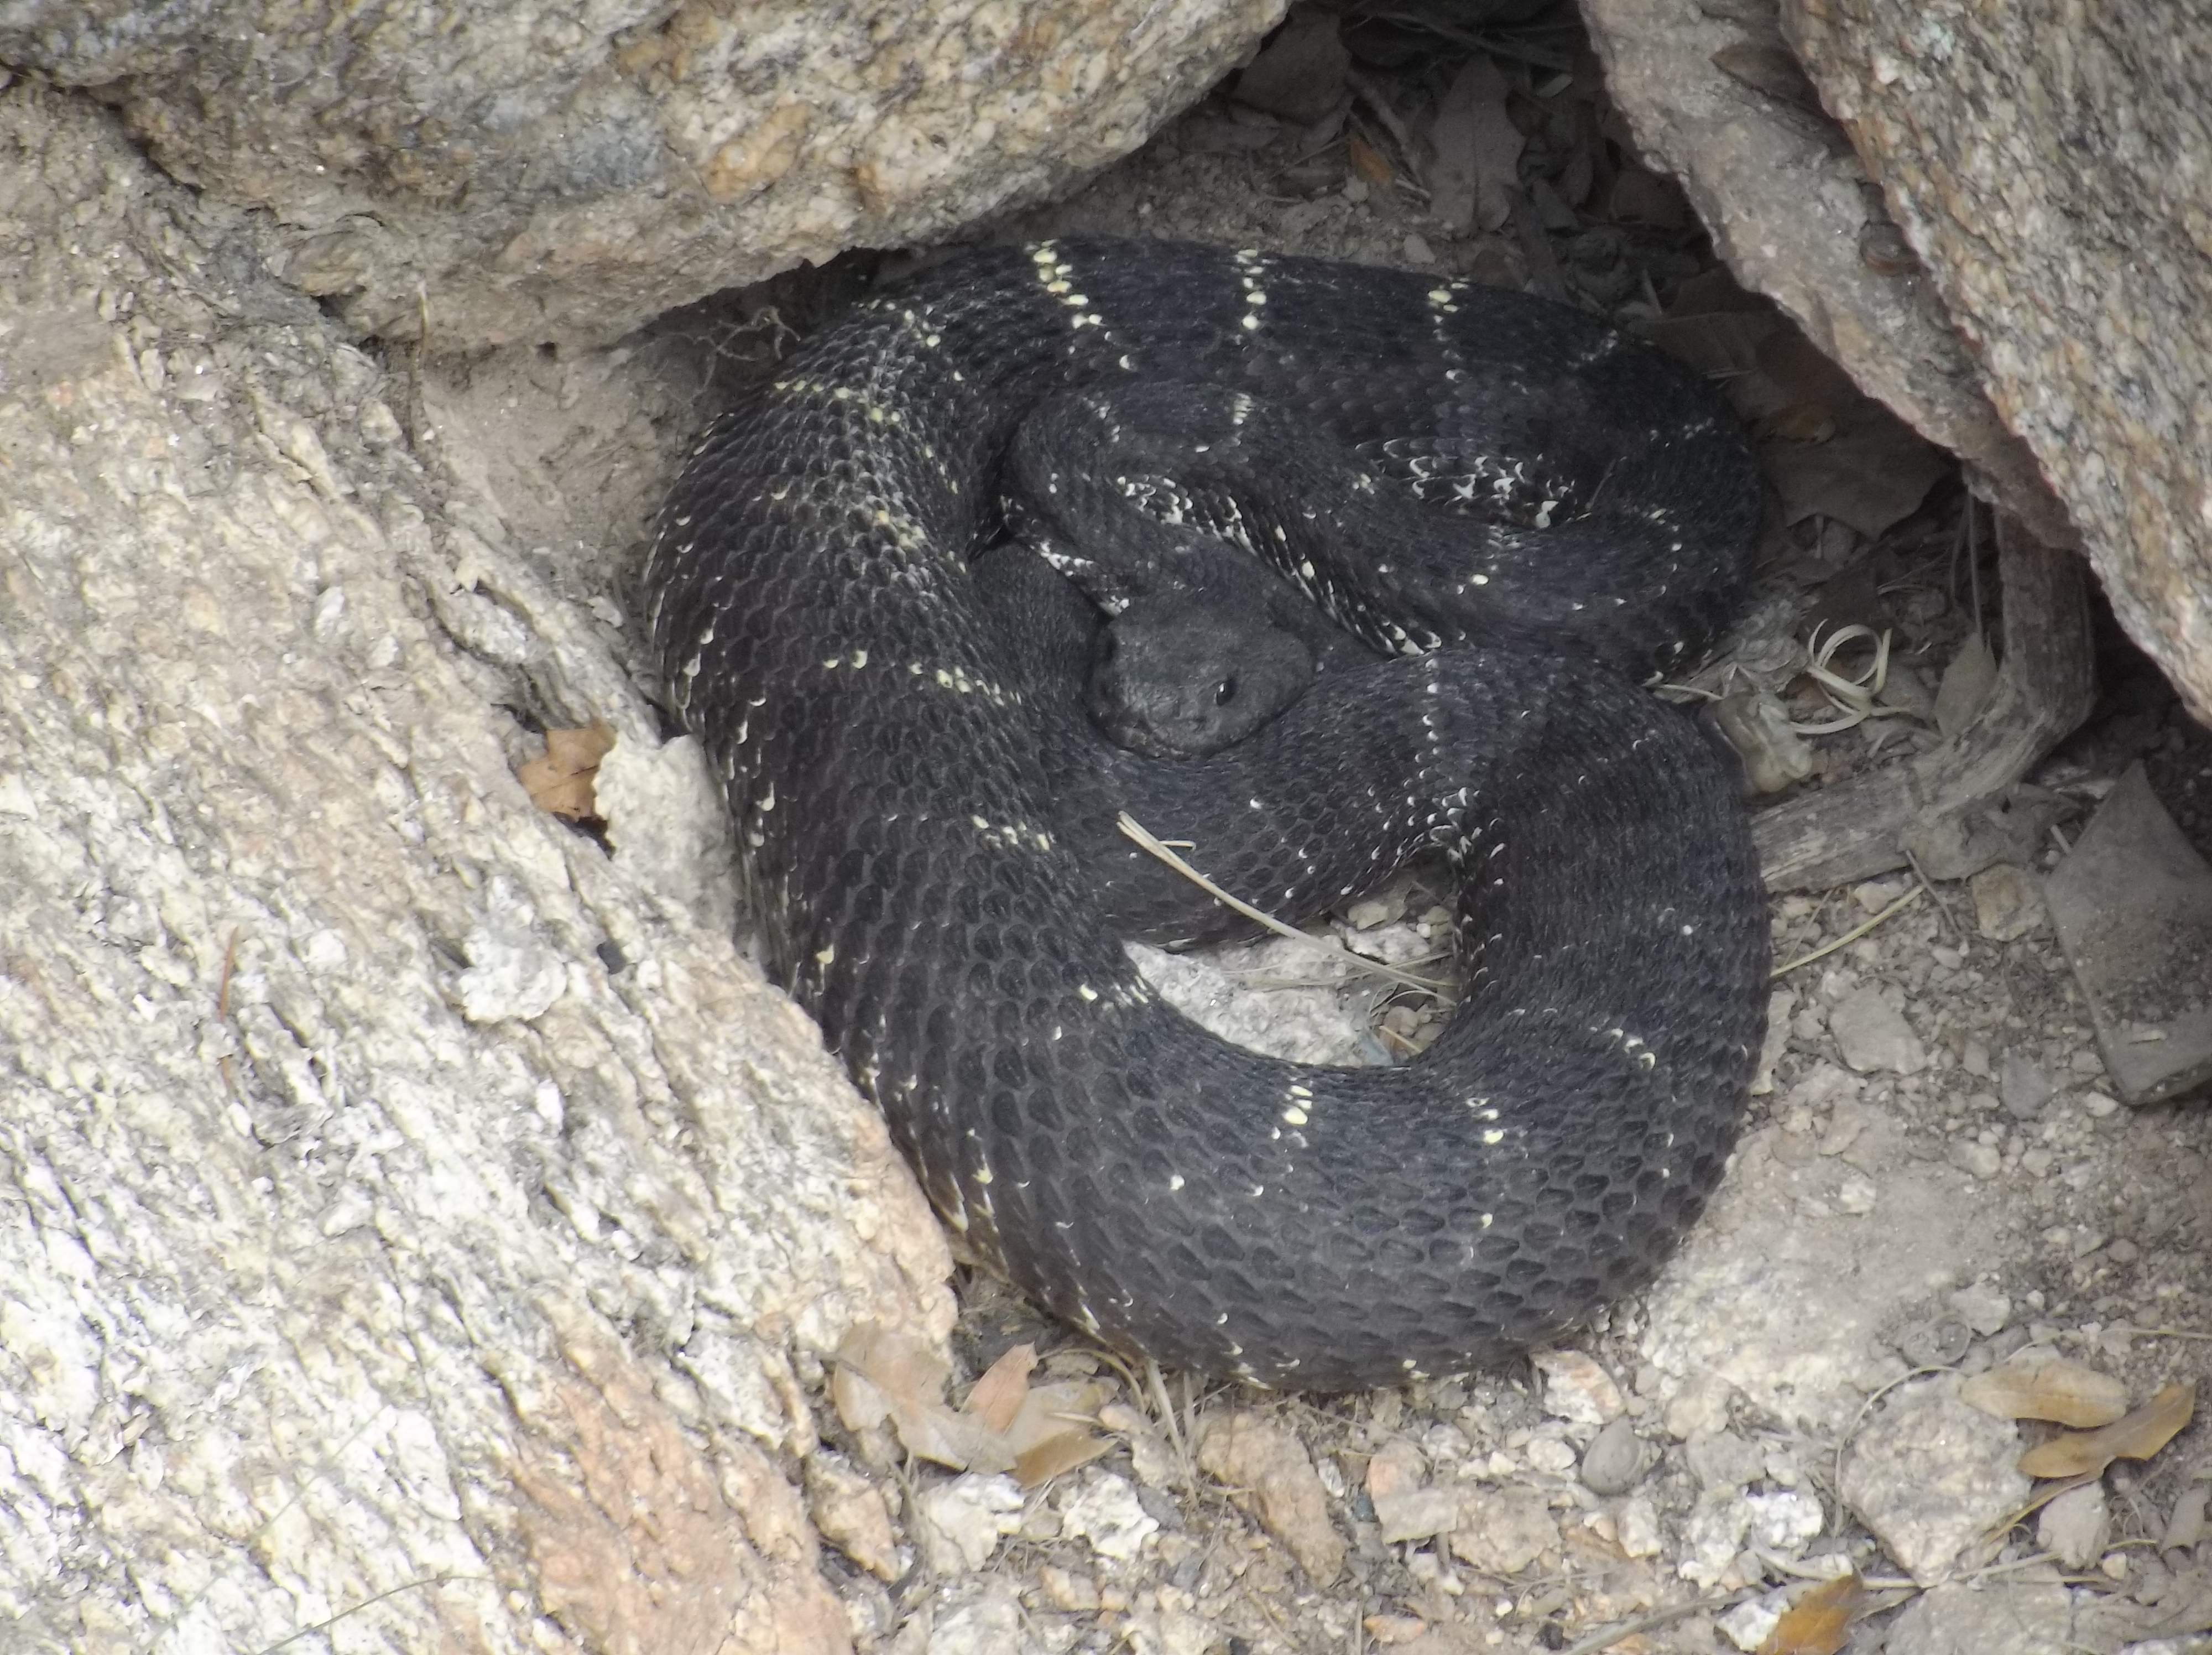 A Black Rattlesnake?